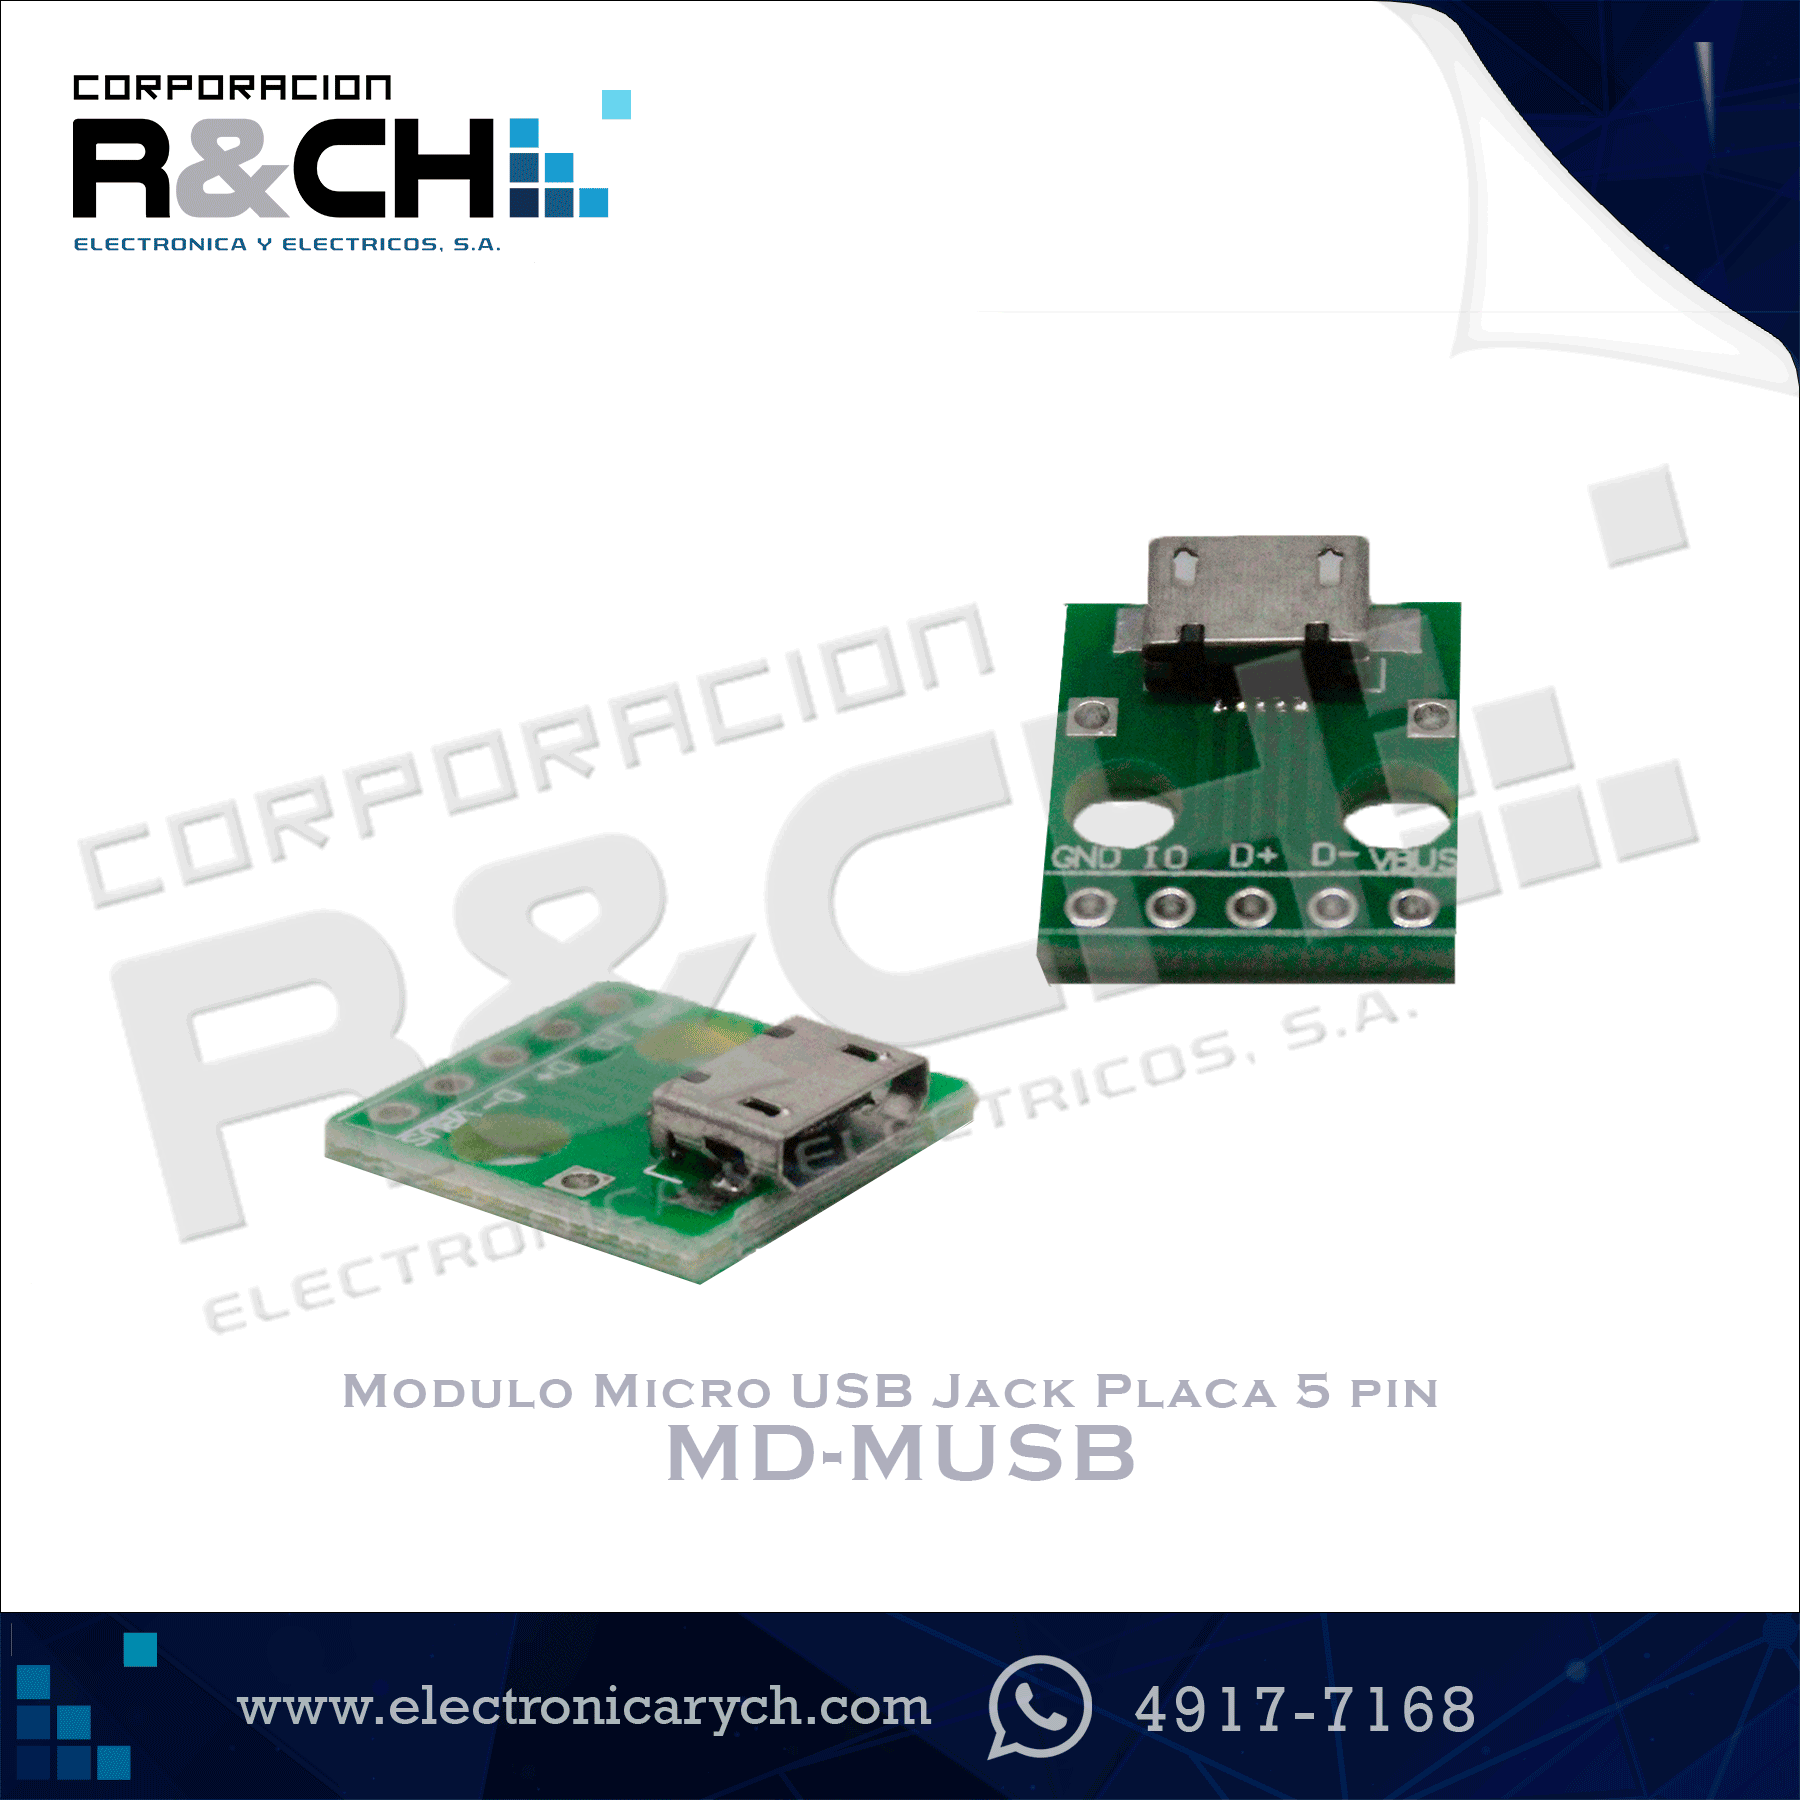 MD-MUSB Modulo Micro USB  Jack Placa 5 pin 2.54mm